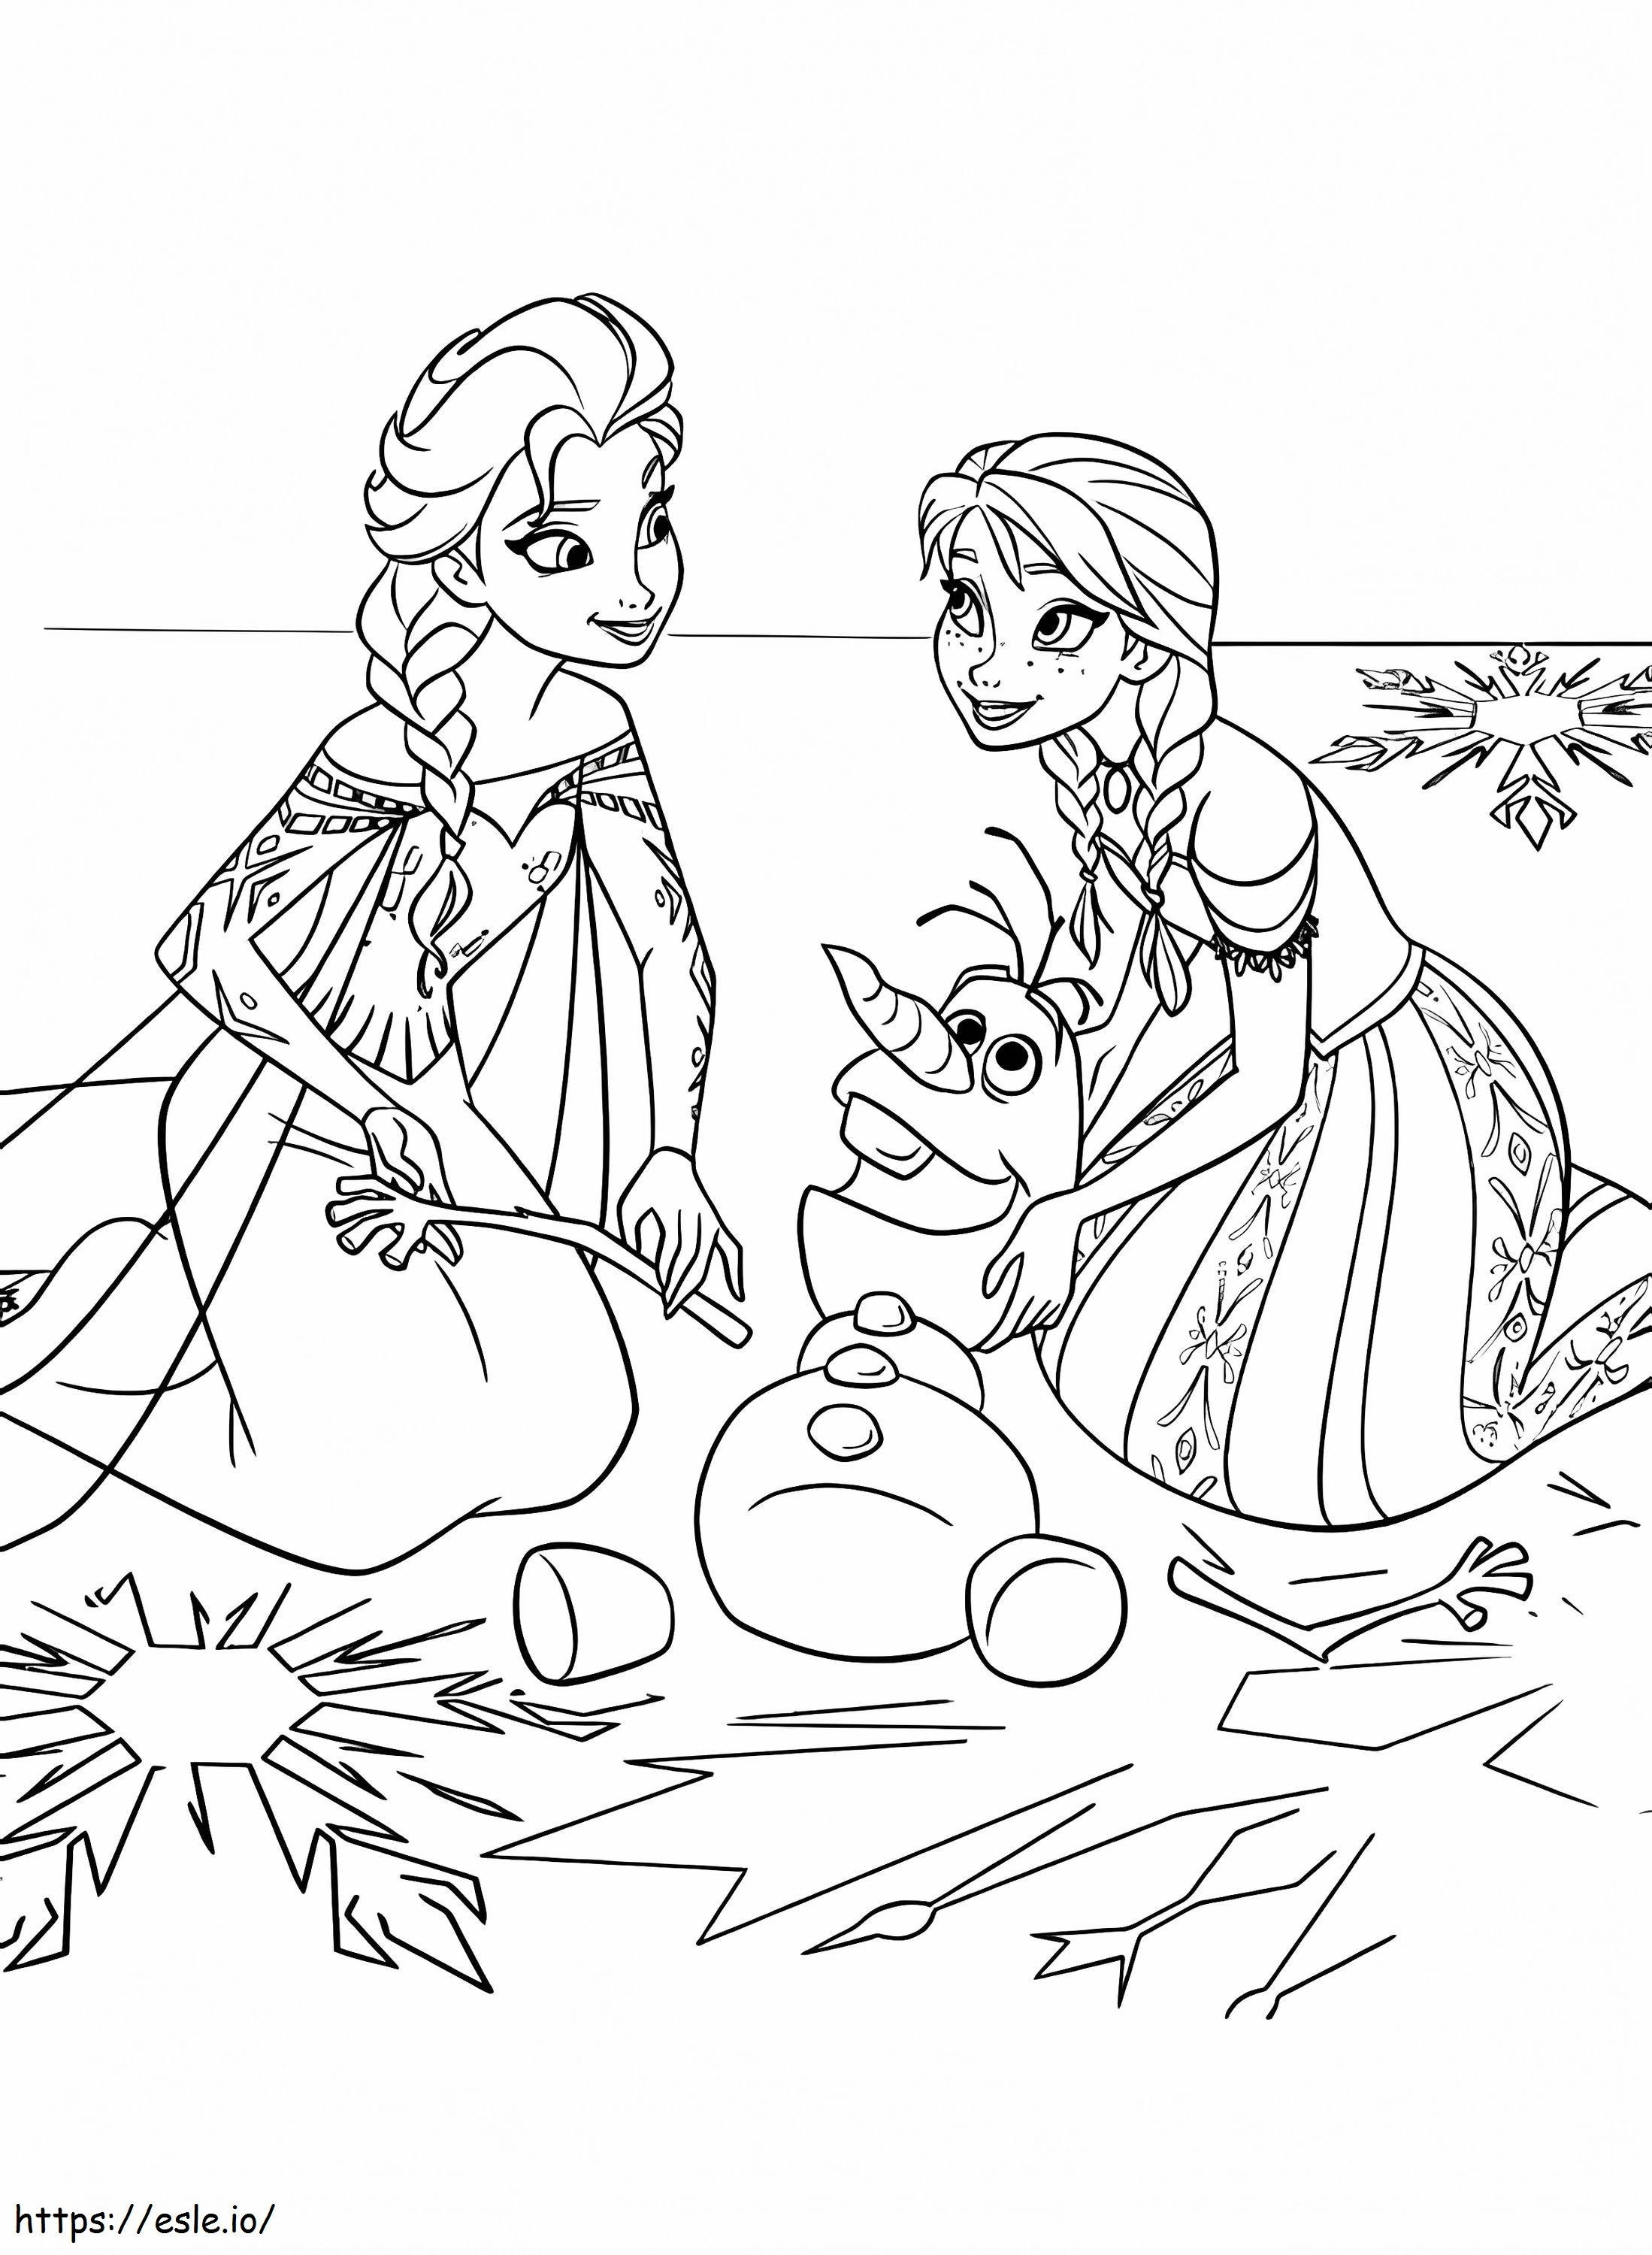 Olaf ve Anna Elsa boyama